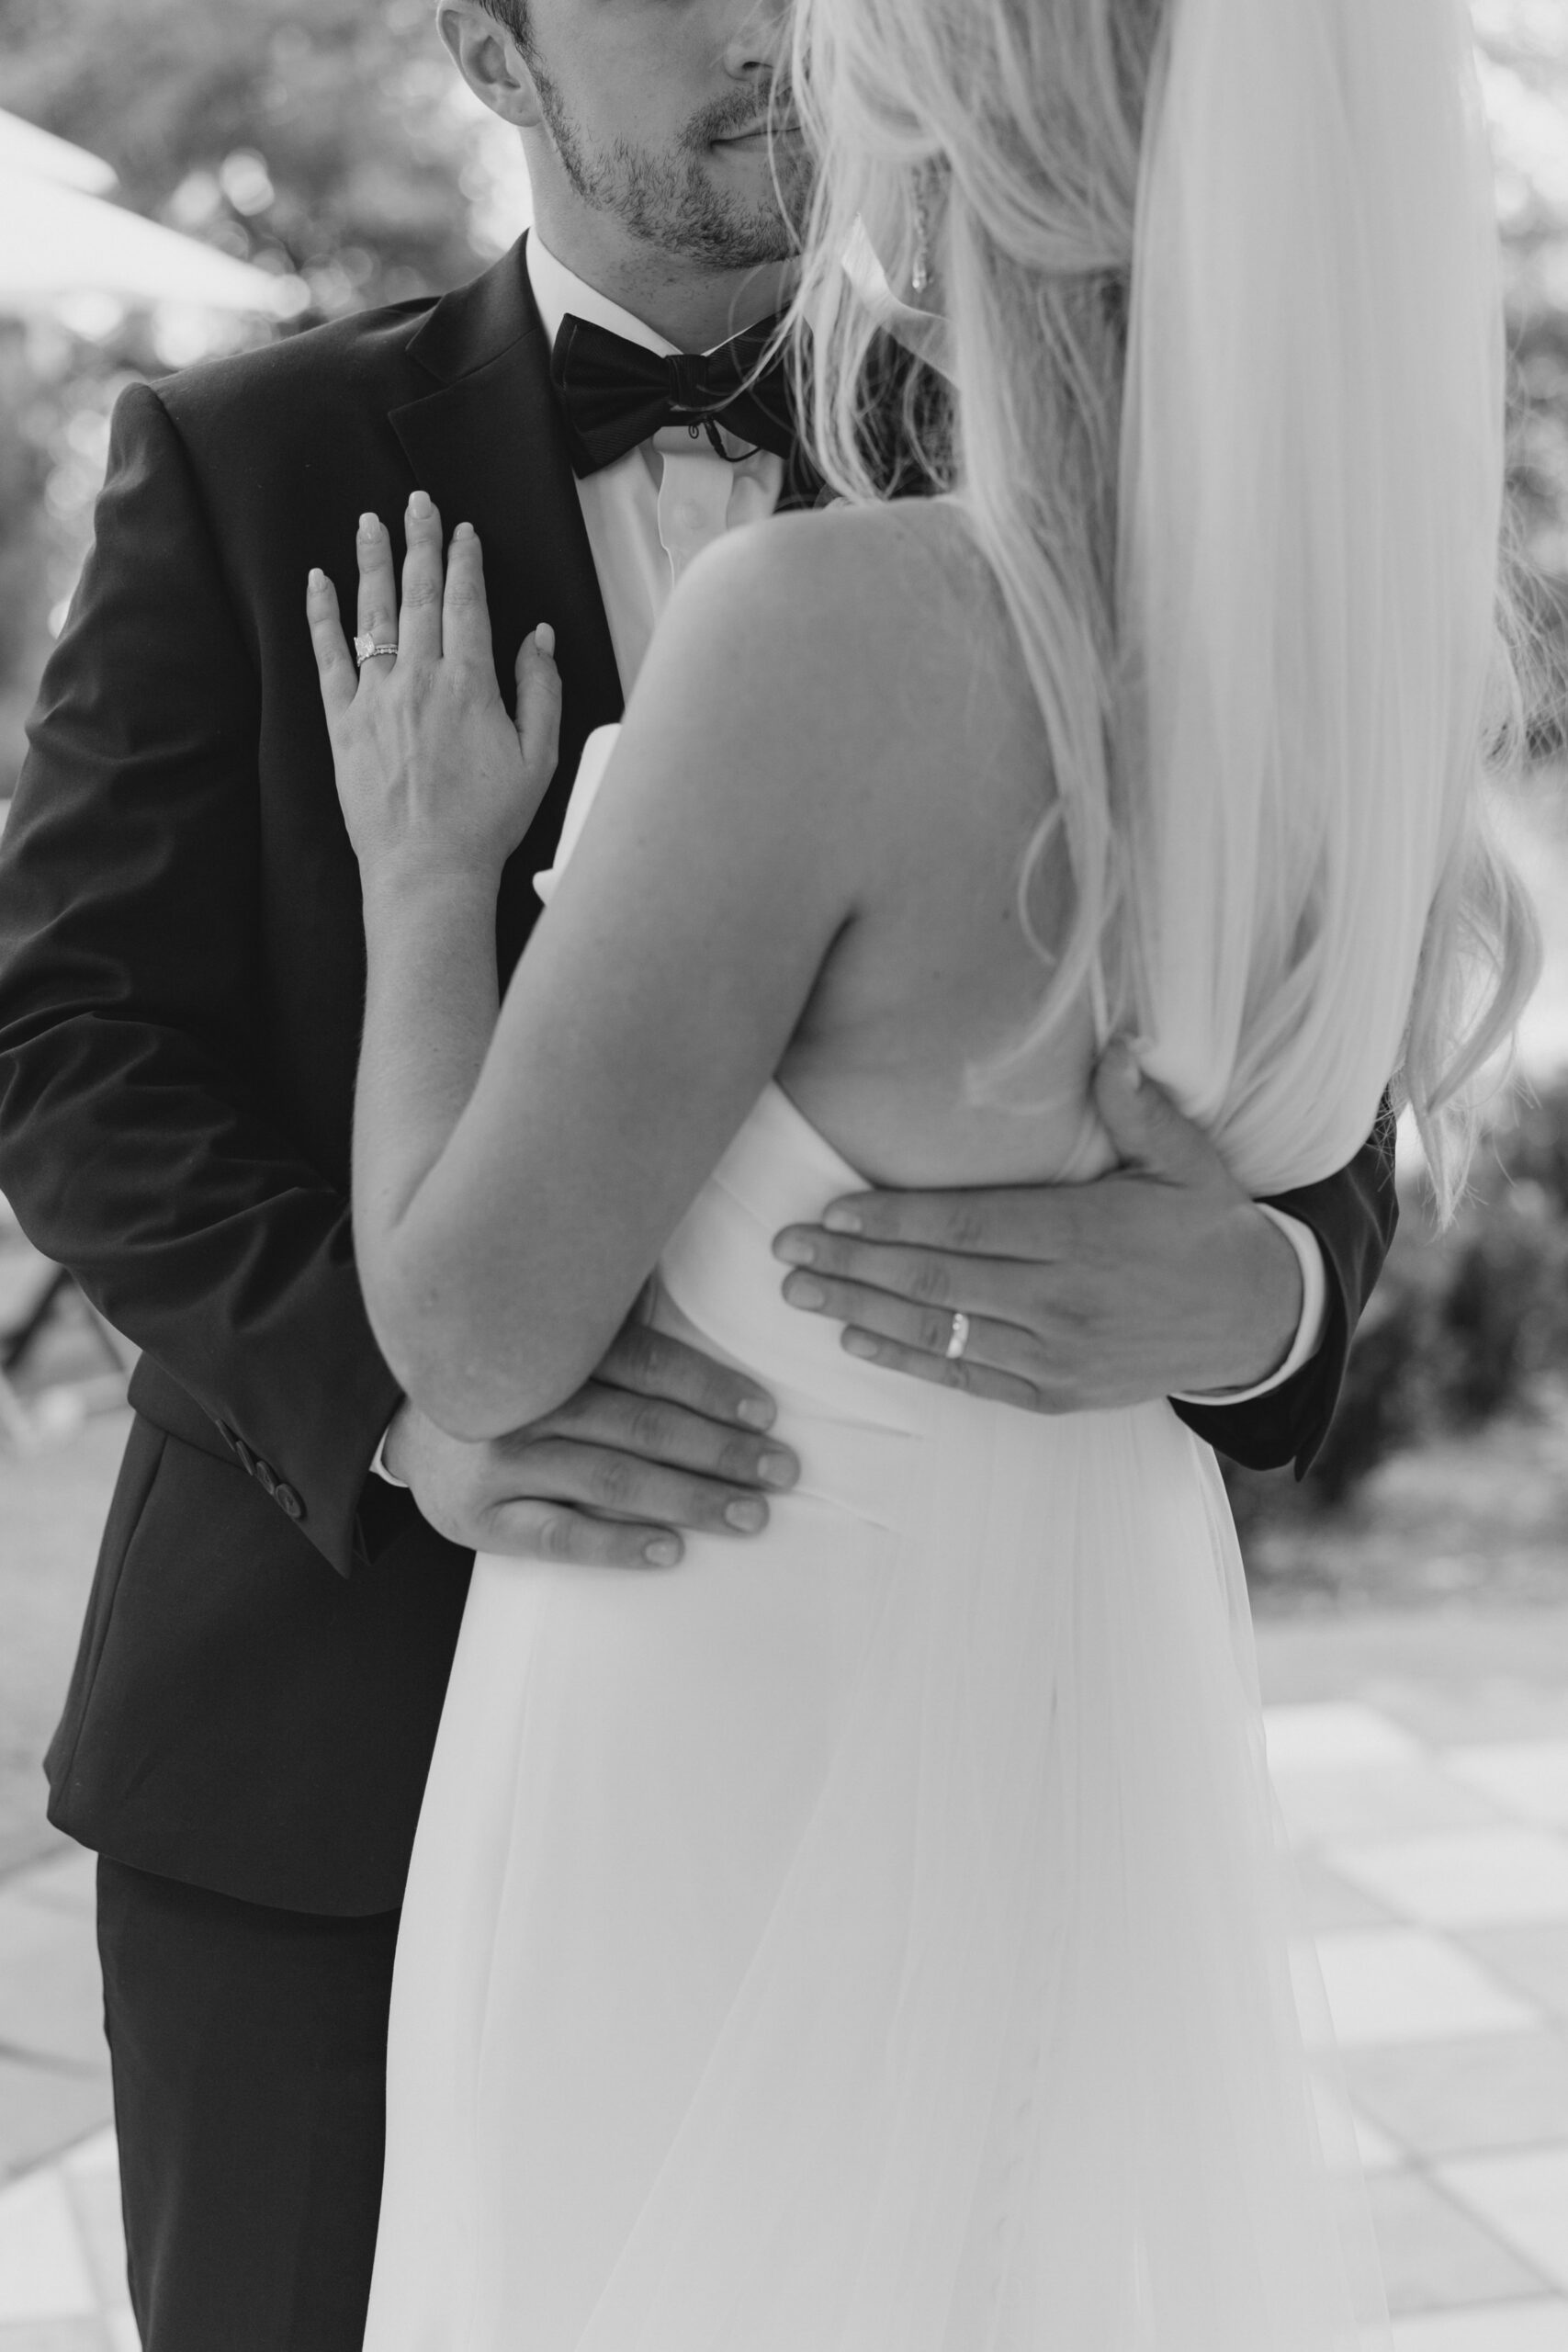 newlywed ring detail photo. black and white wedding photo.